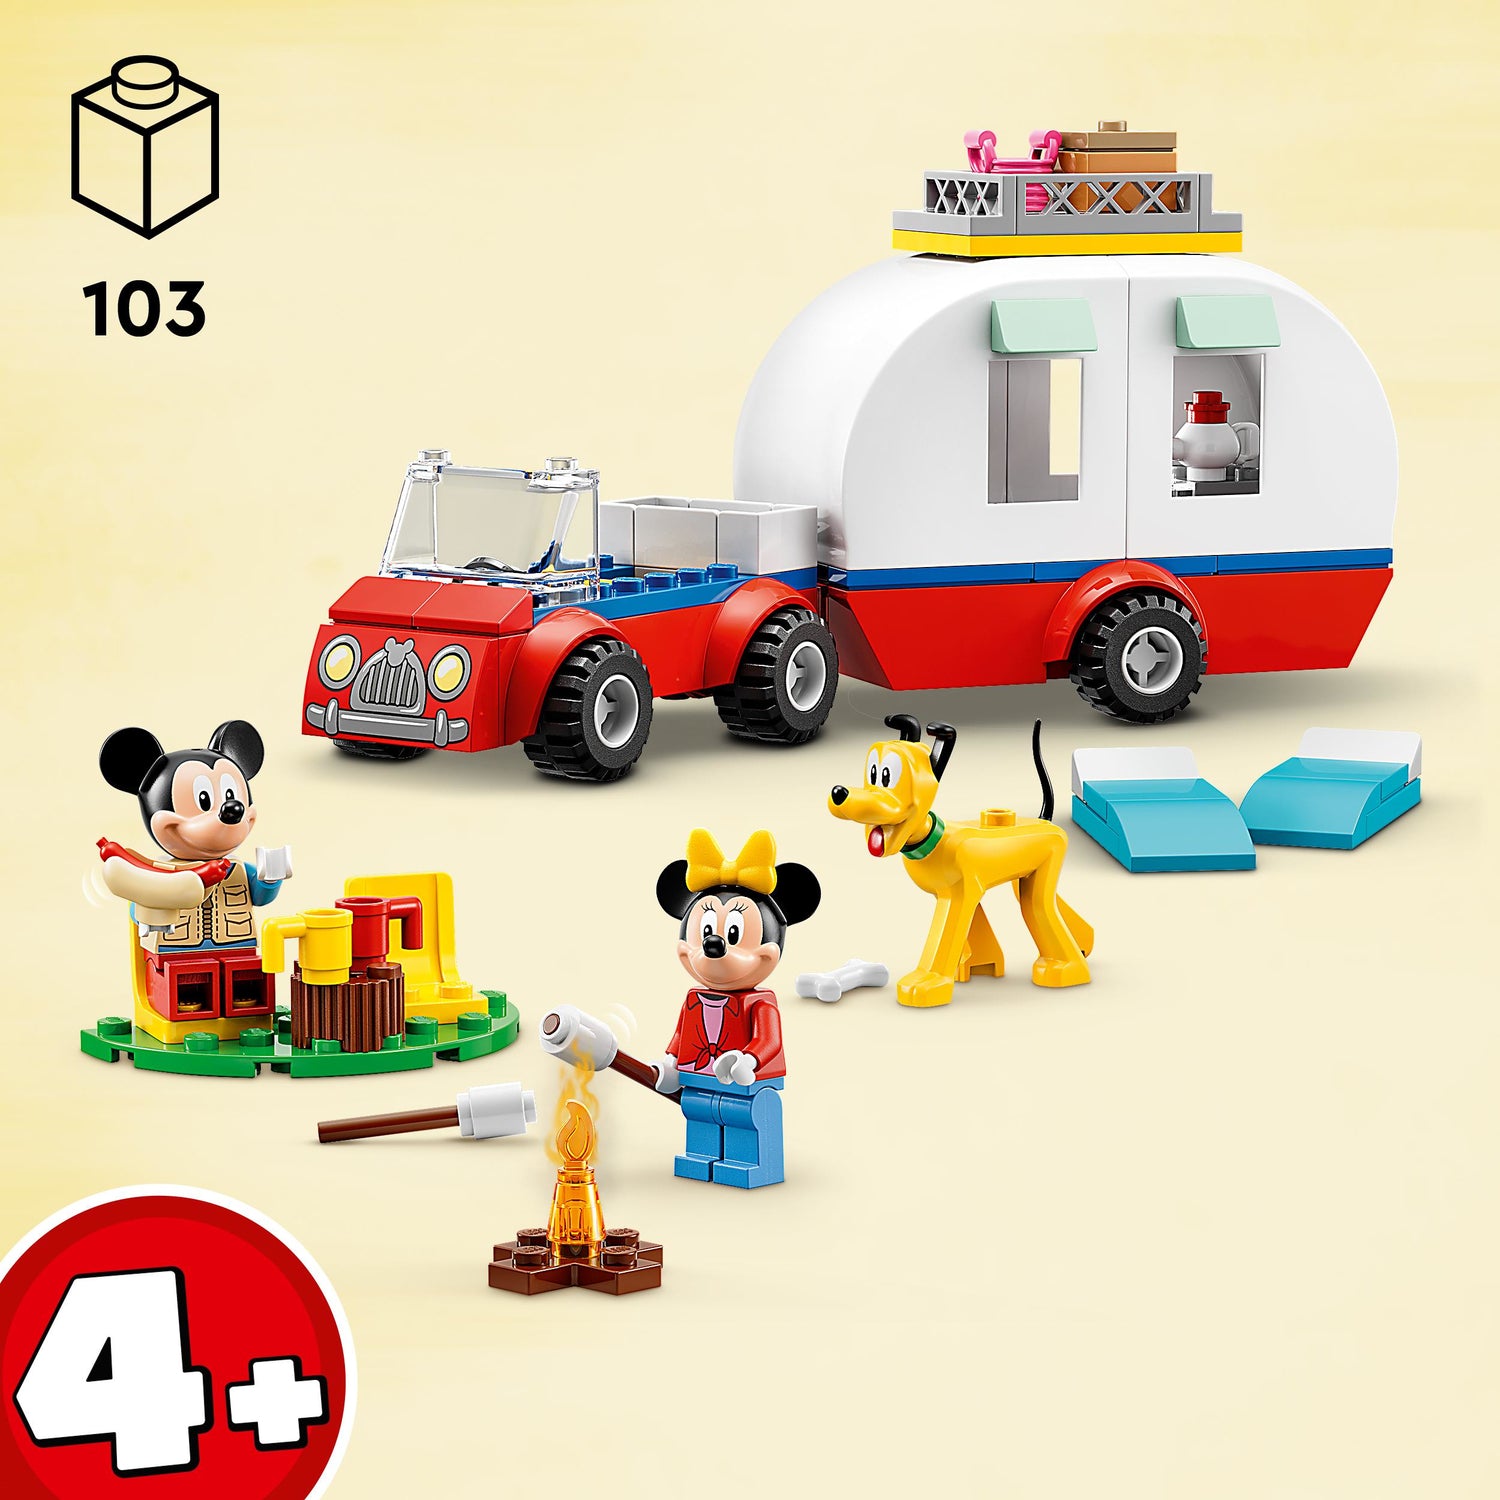 LEGO® Disney Mickey &amp; Minnie Camping Trip Set